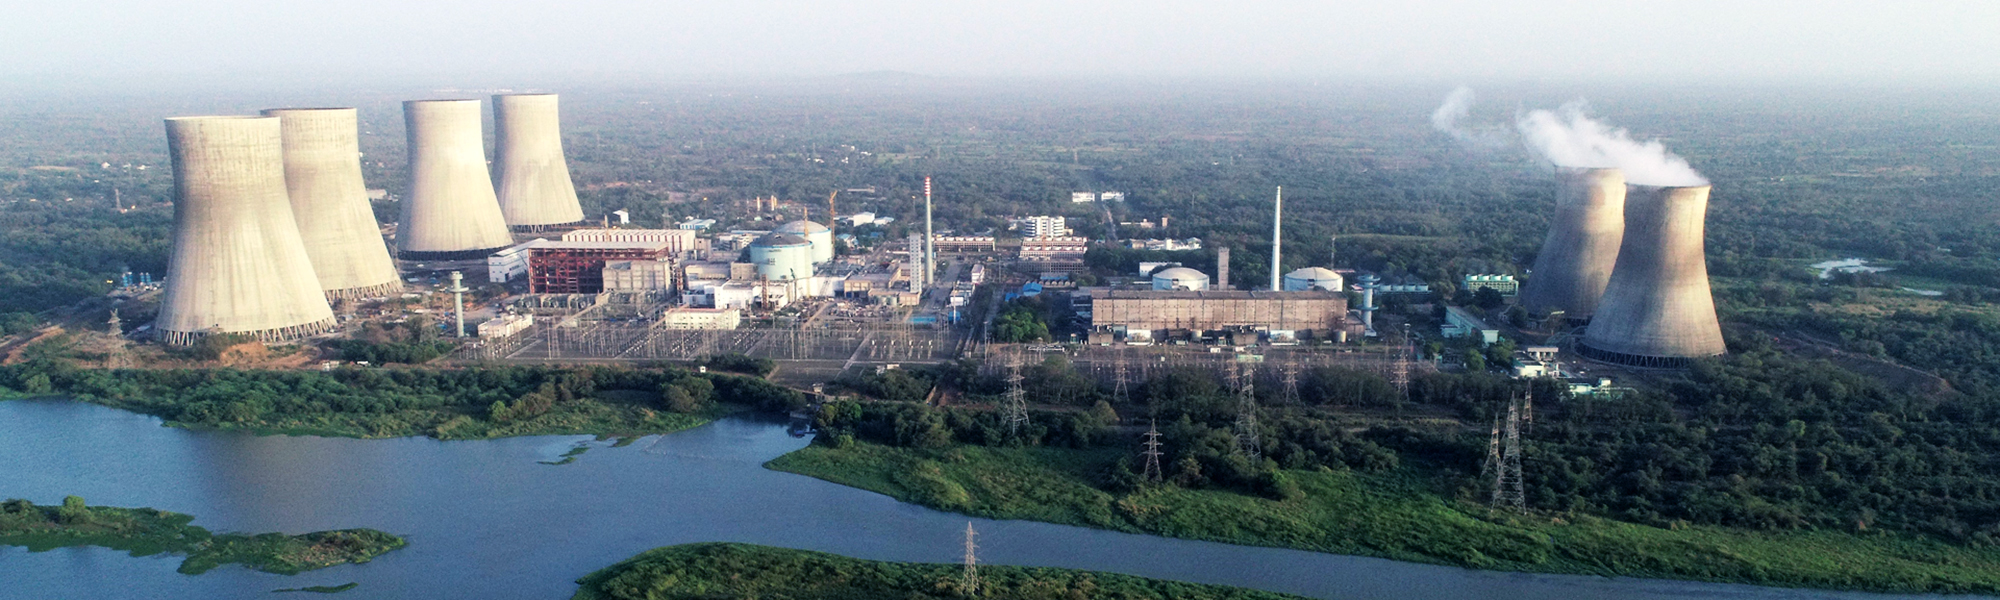 Kakrapar Atomic Power Station 3&4, India